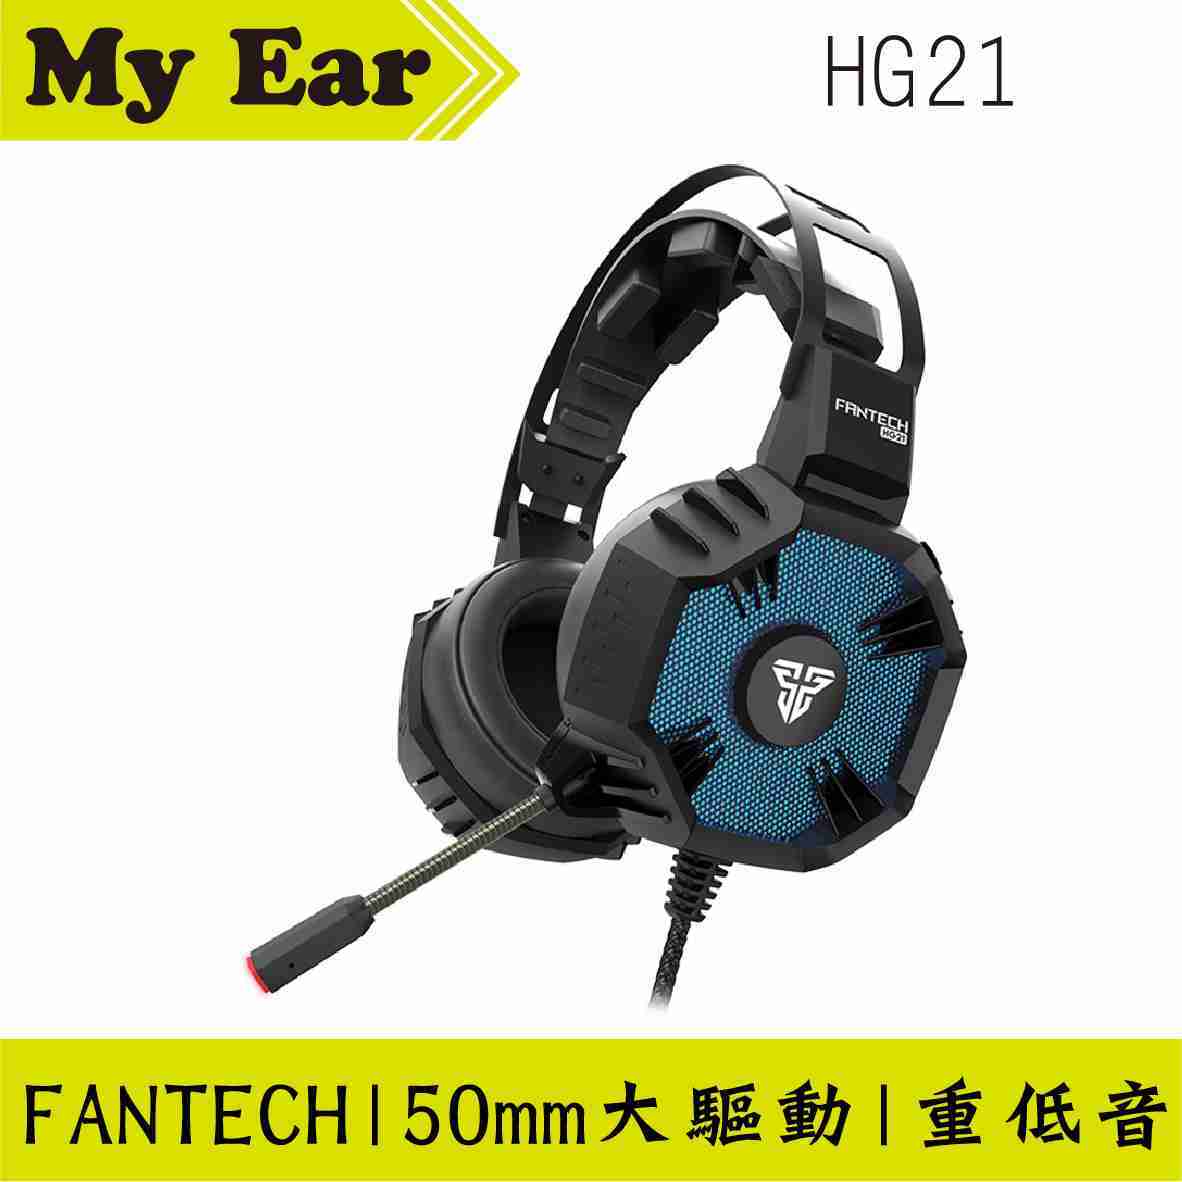 FANTECH HG21 7.1聲道 RGB 電競 耳罩式耳機 | My Ear耳機專門店